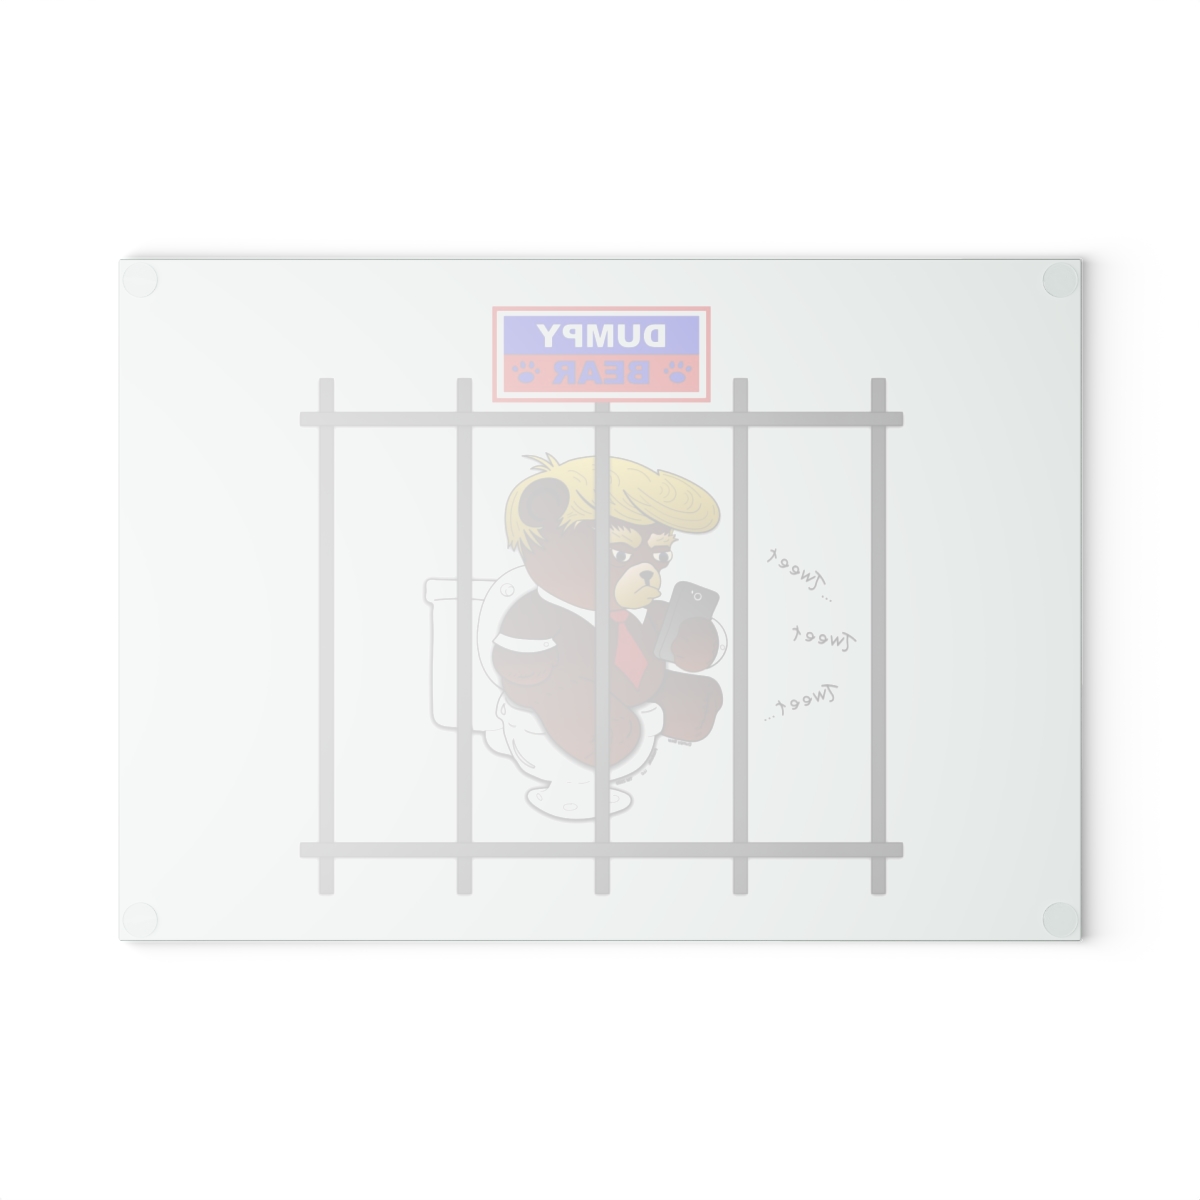 Dumpy Bear Tweeting on Toilet Behind Bars - Glass Cutting Board product thumbnail image